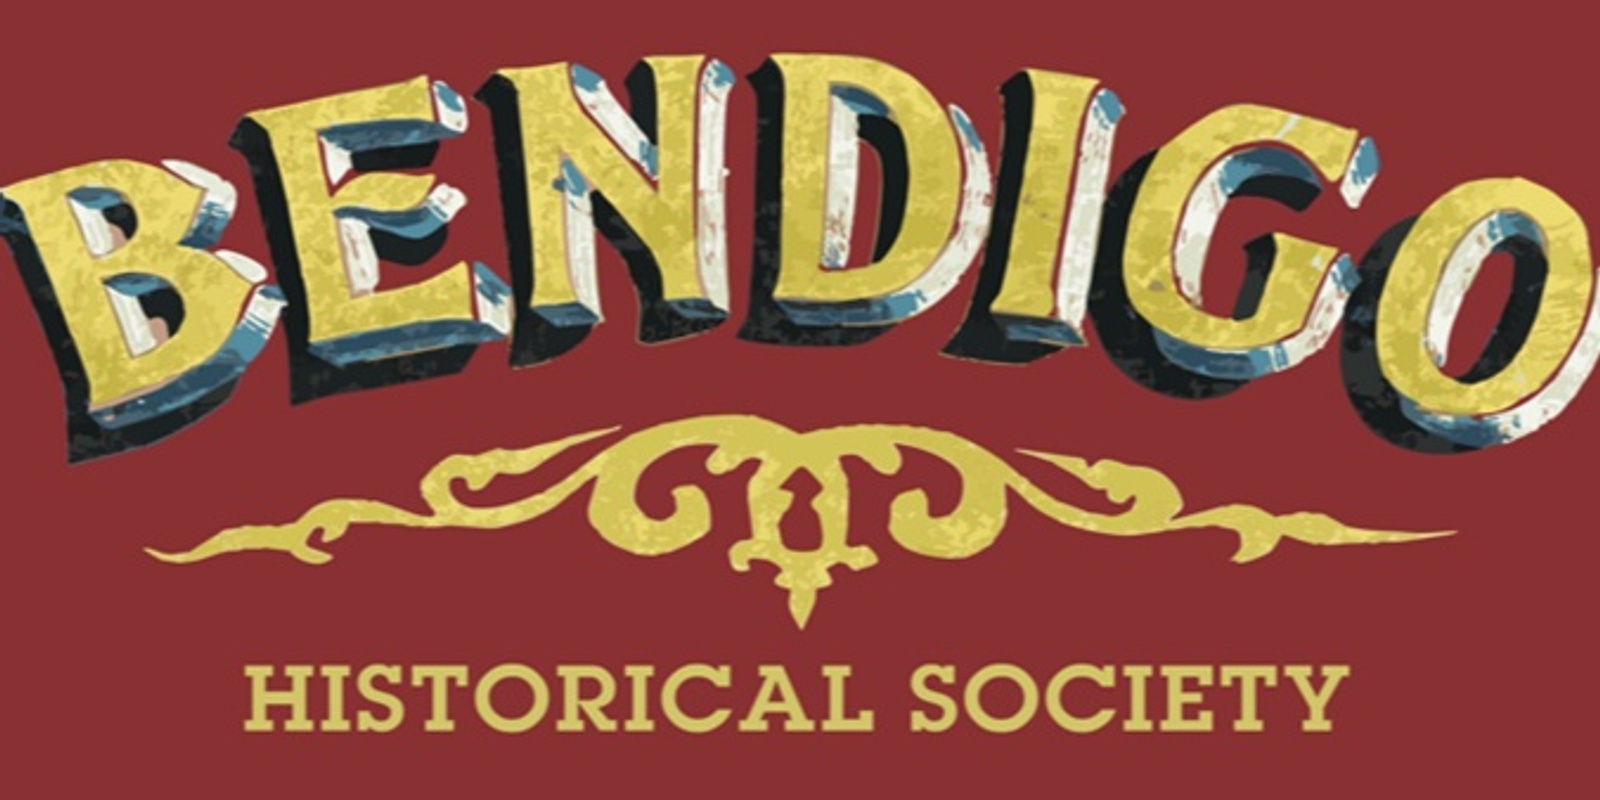 Bendigo Historical Society Inc.'s banner